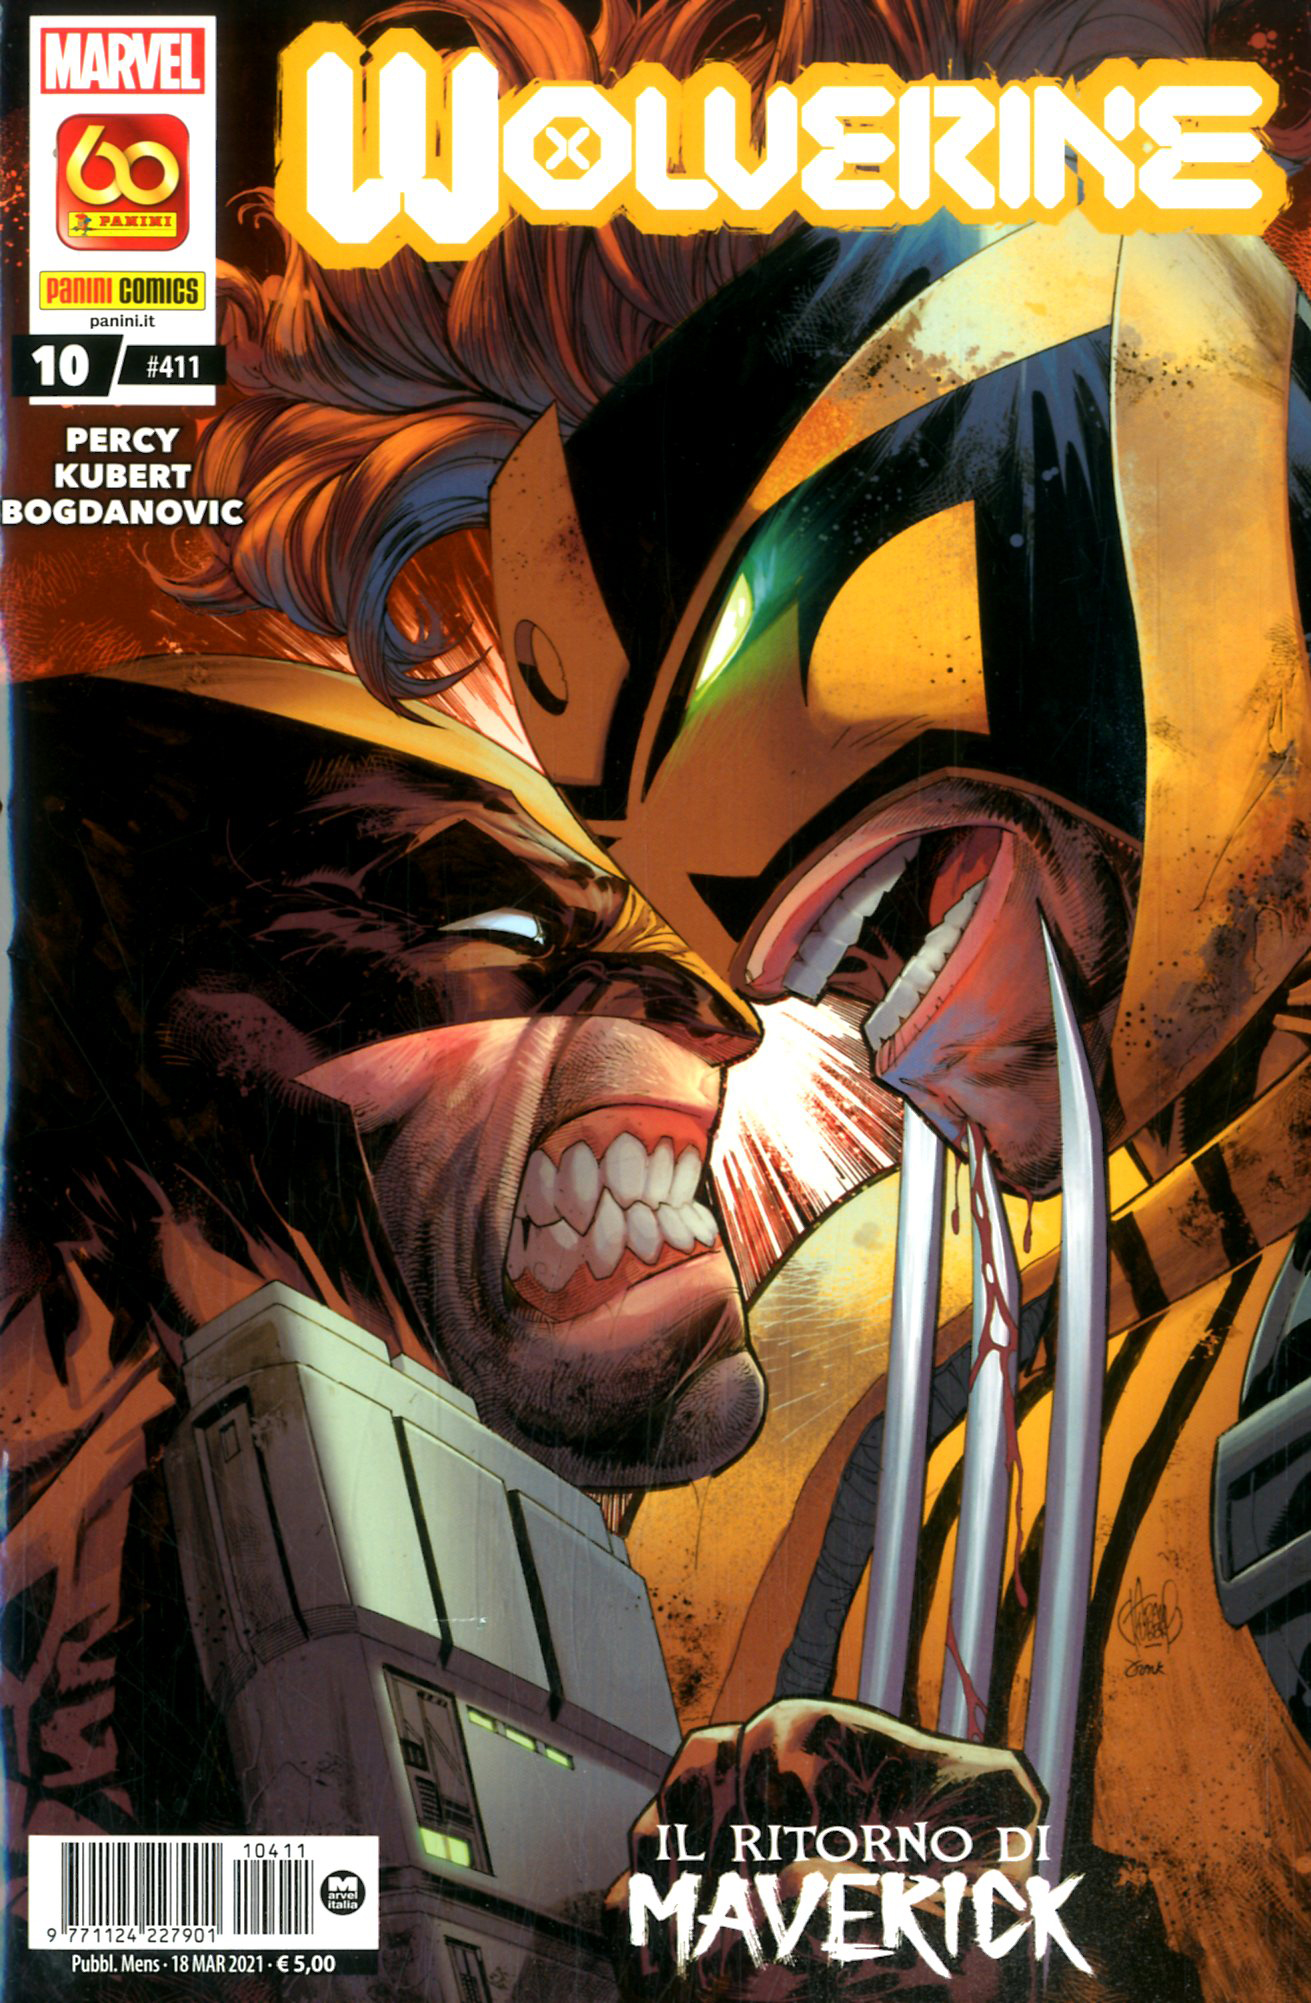 Fumetto – Panini Comics – Wolverine #411 – Wolverine #...